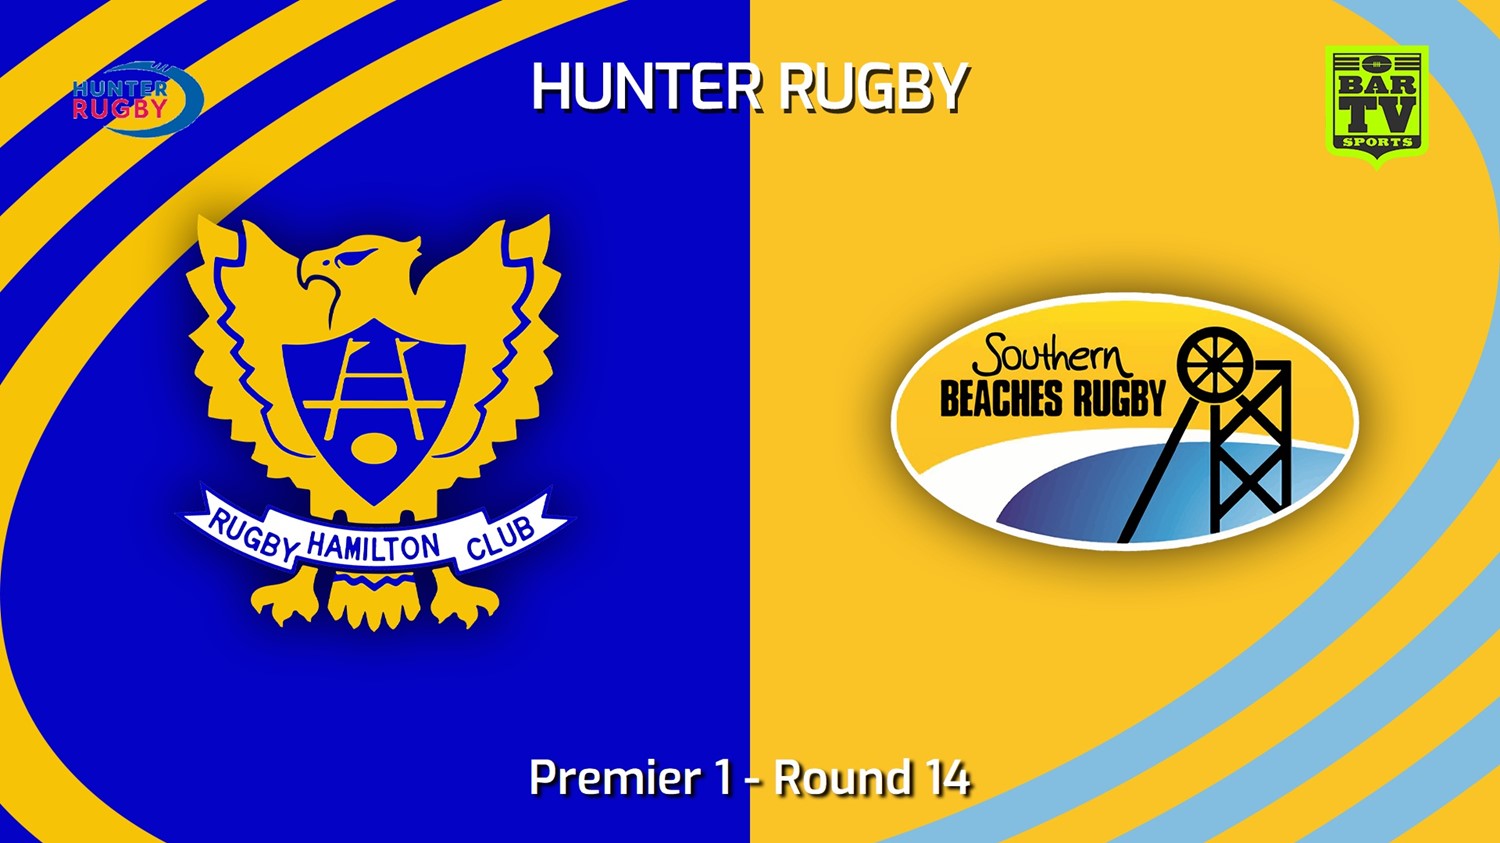 230722-Hunter Rugby Round 14 - Premier 1 - Hamilton Hawks v Southern Beaches Slate Image